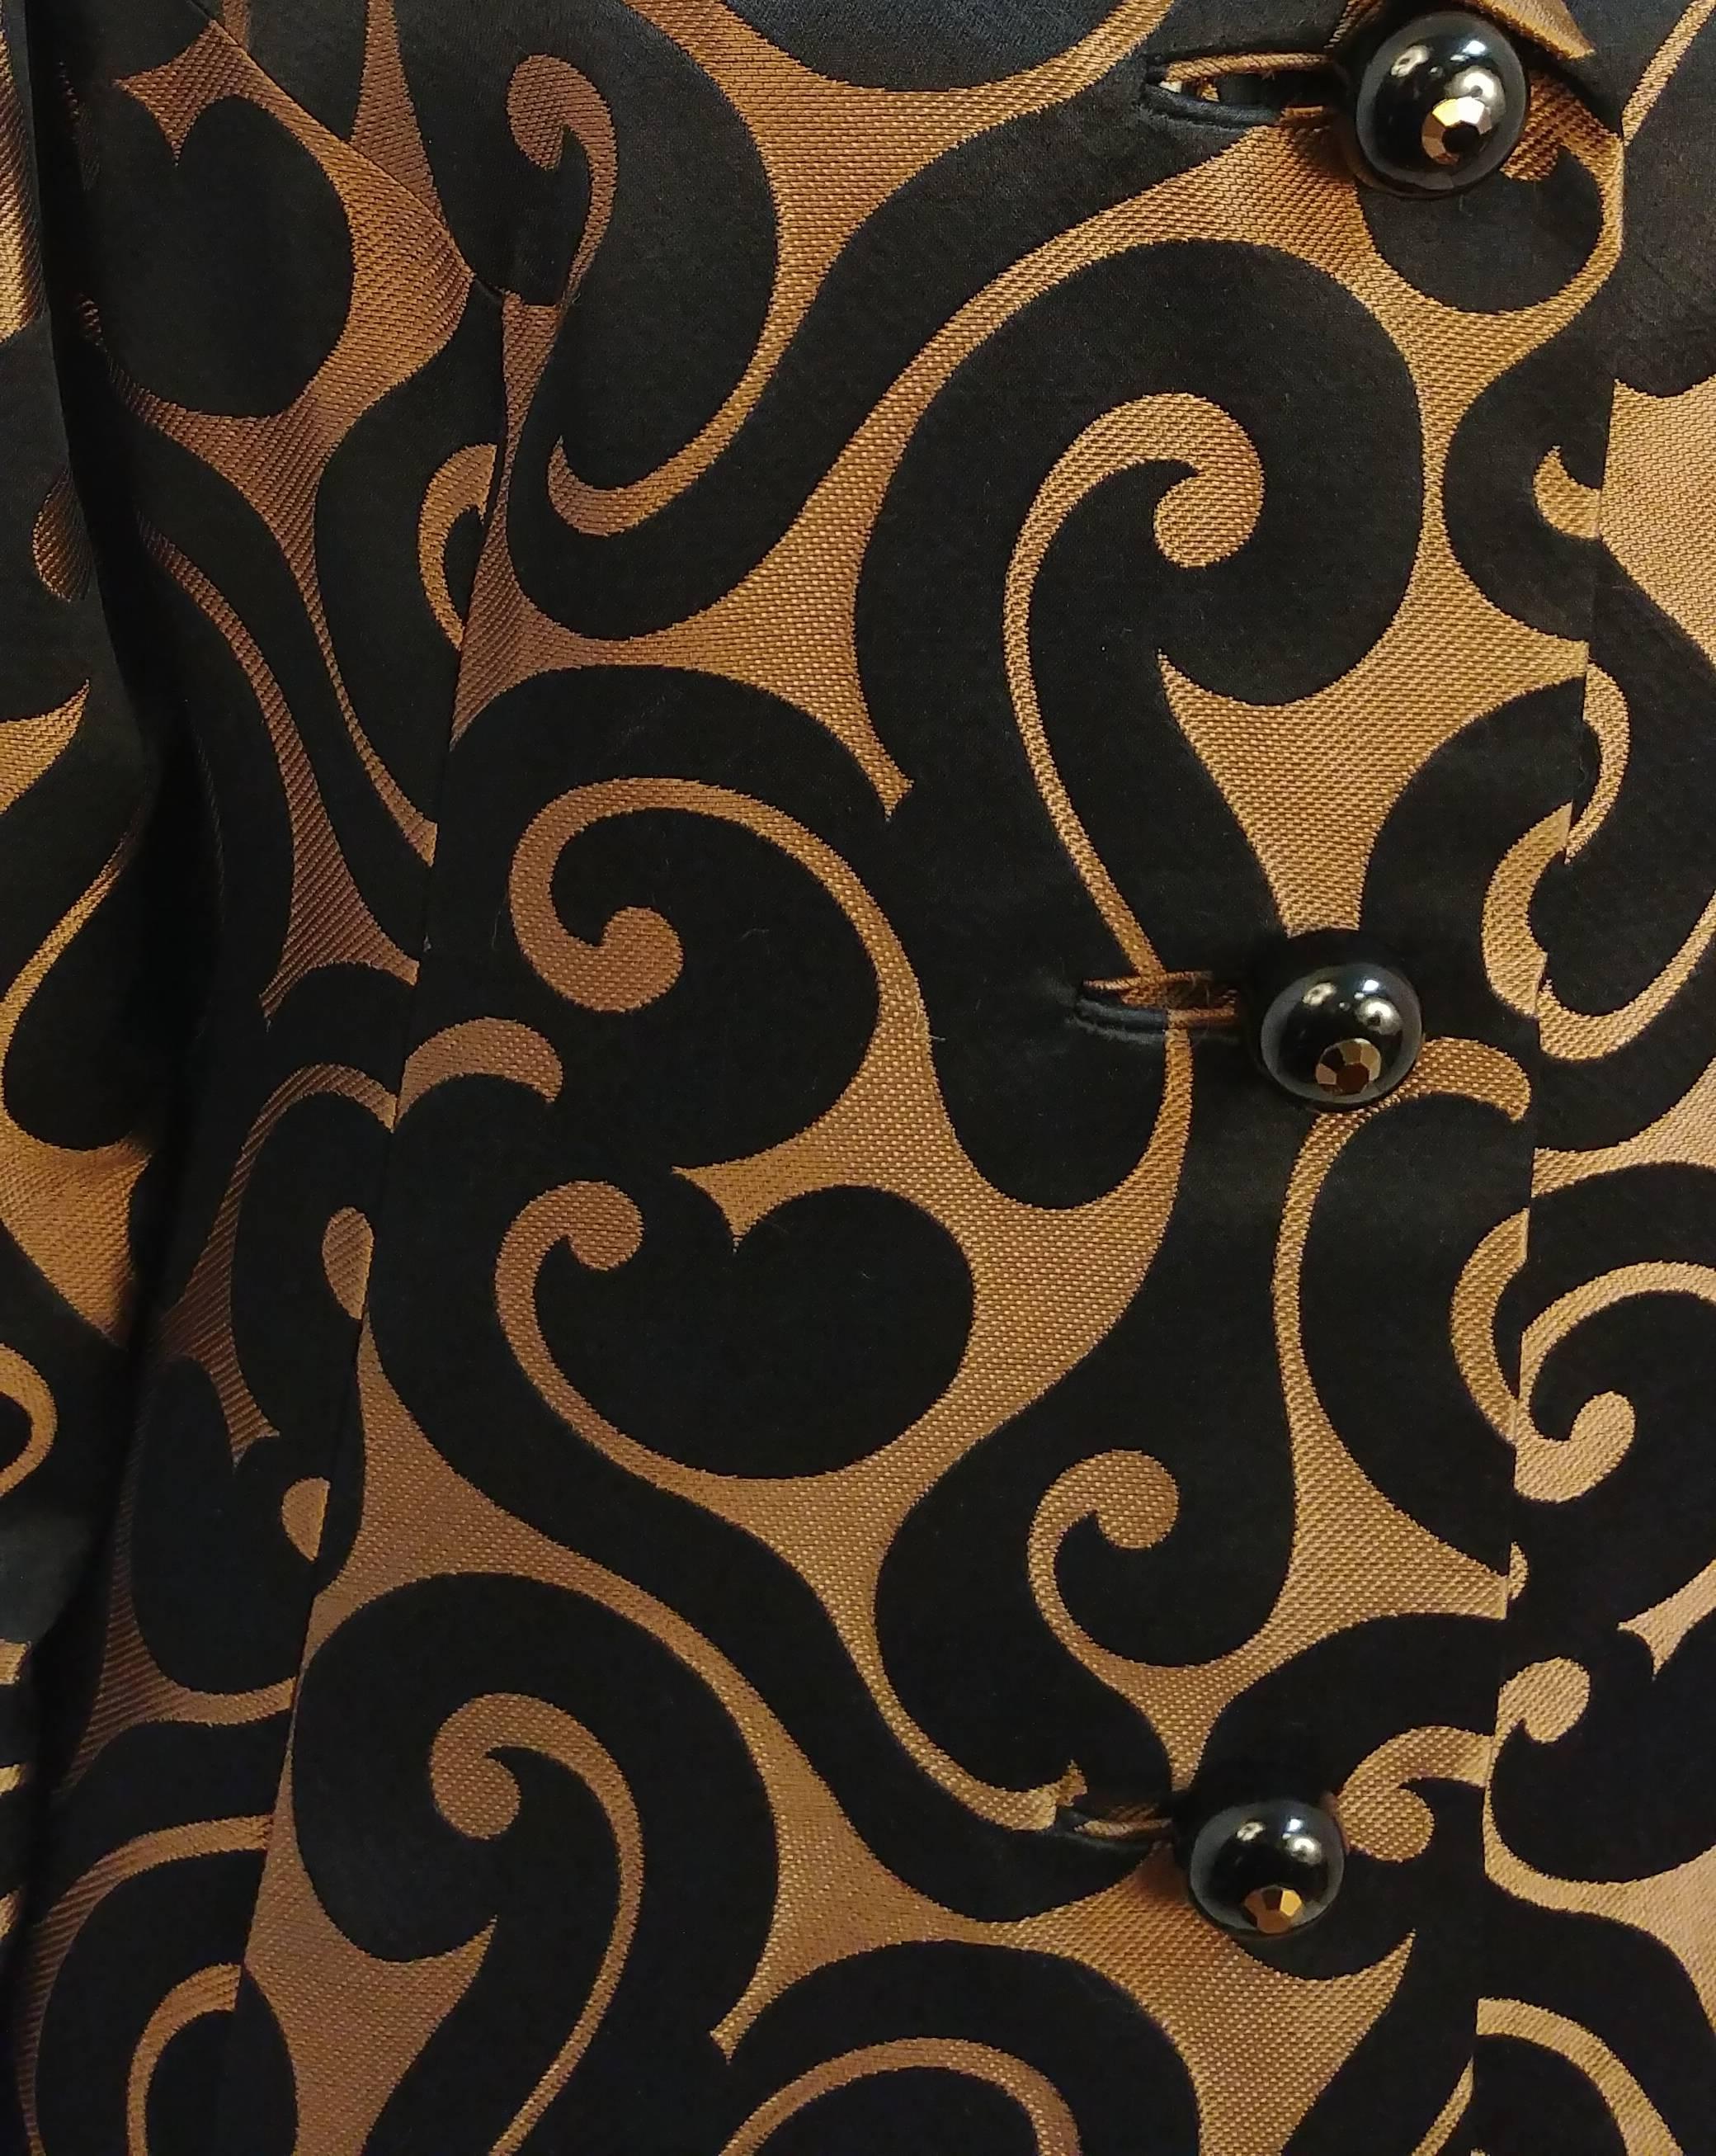 1960s Brocade Swirl Coat. Rhinestone buttons. 